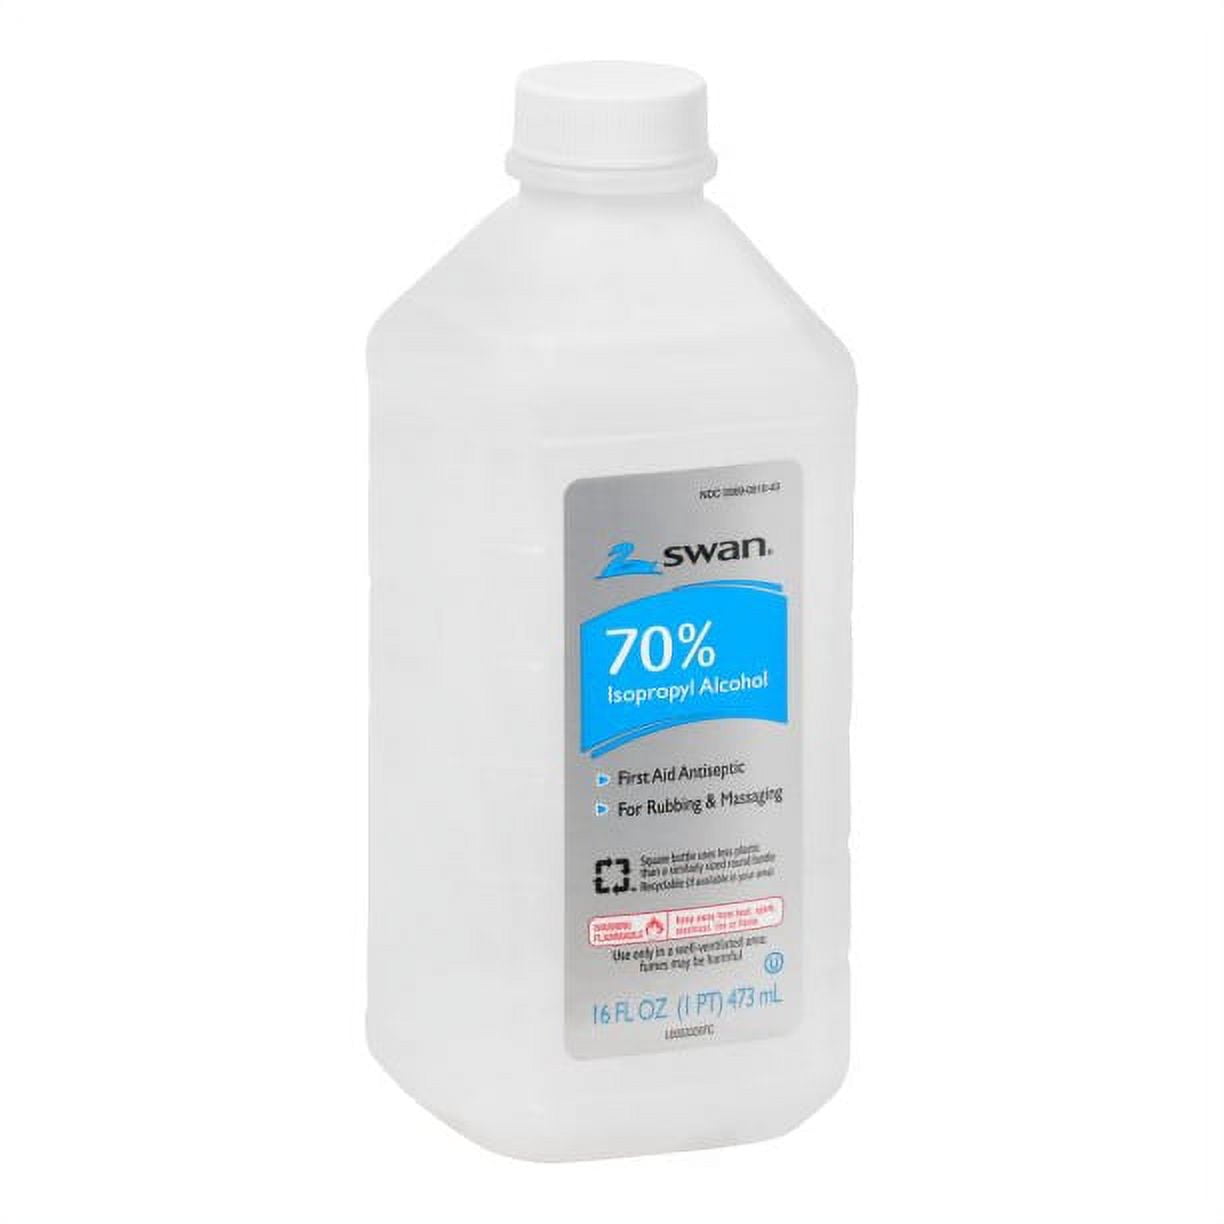 Compitt Prophyl 70 Alcohol isopropílico al 70% limpieza desinfecci